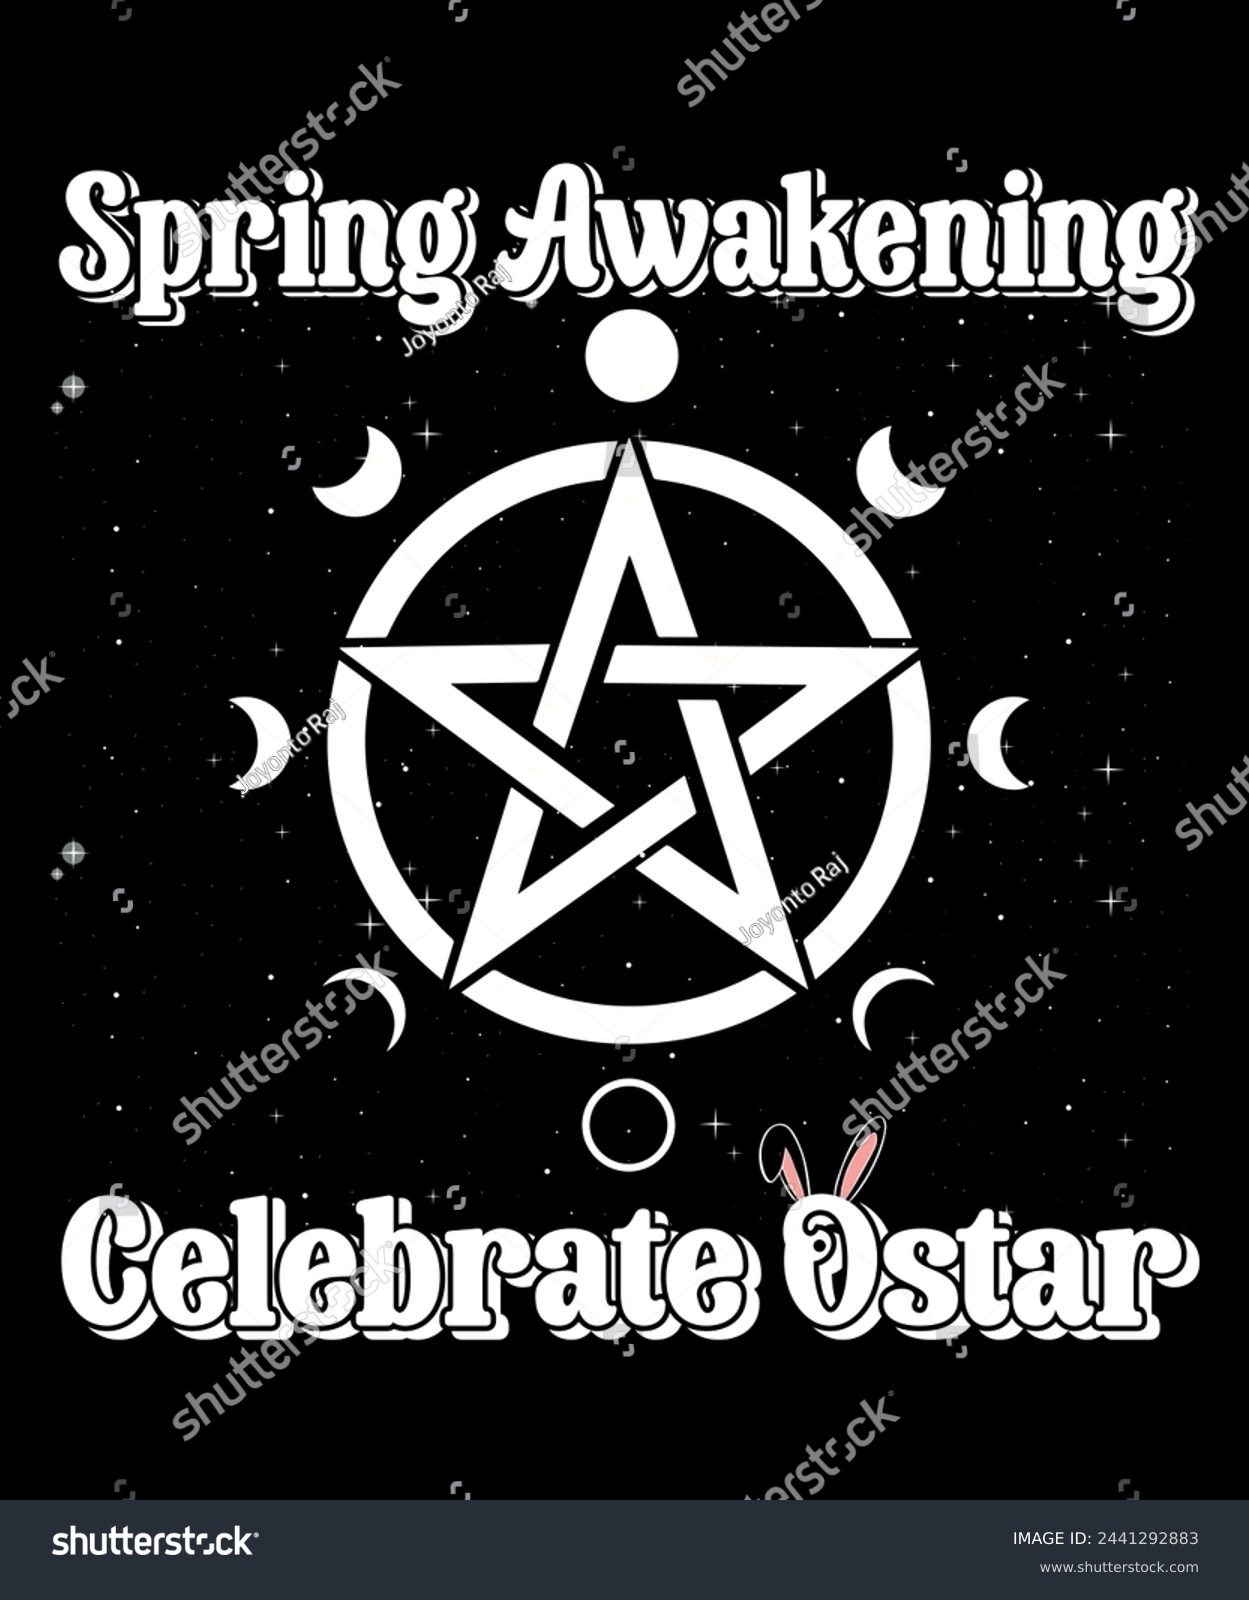 SVG of Spring Equinox – varies T-shirt design.  Spring awakening celebrate ostar. svg